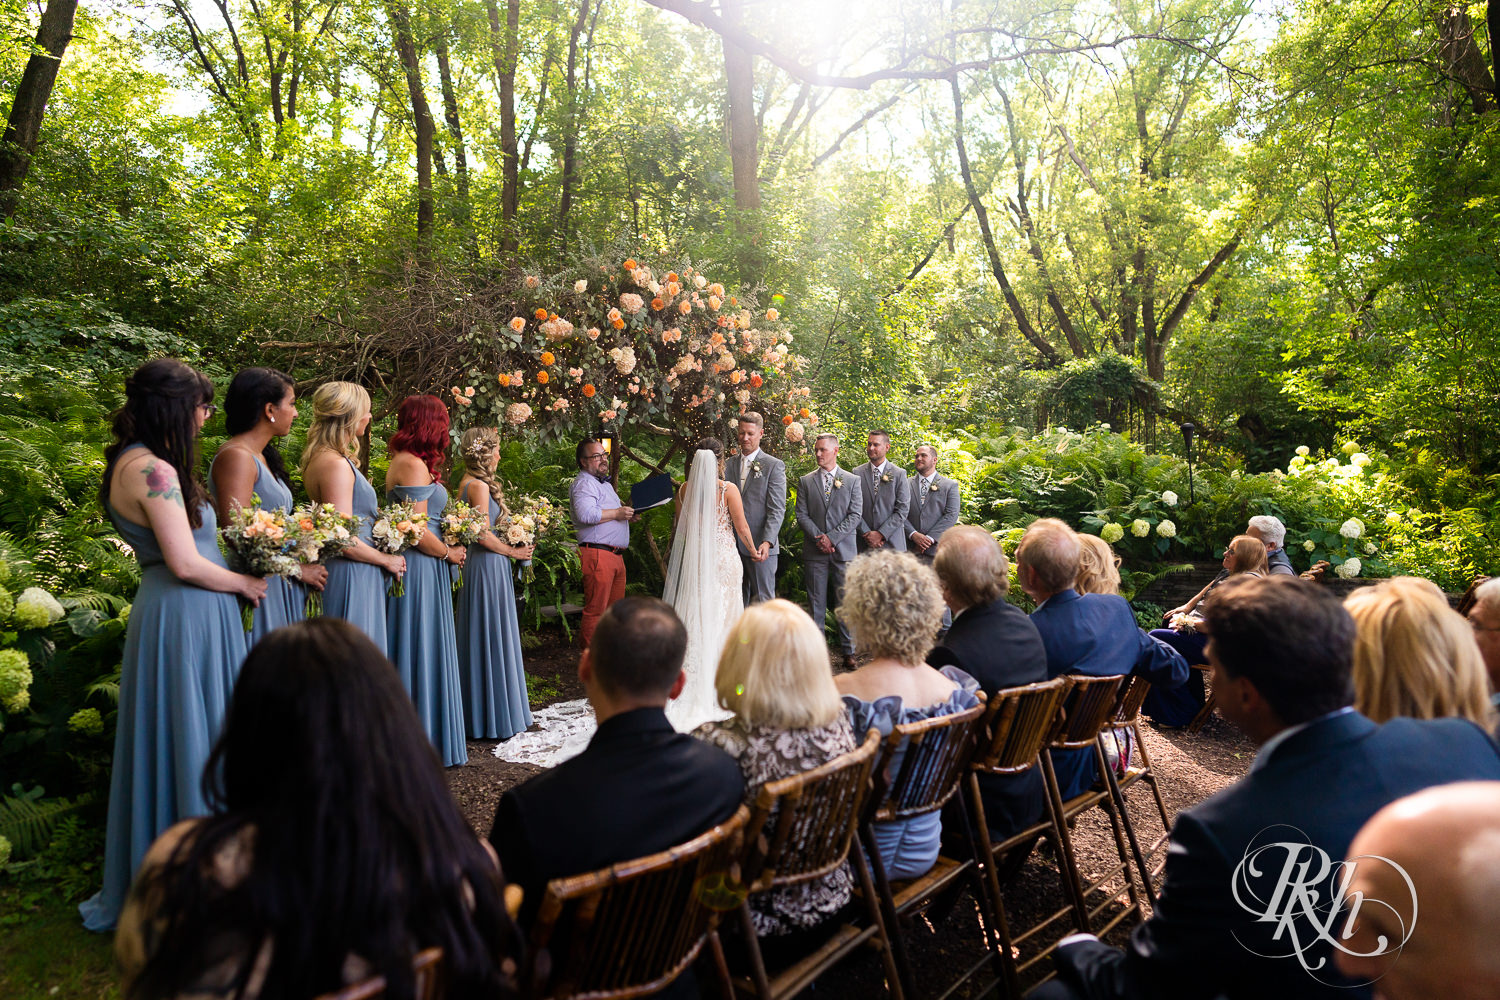 Outdoor wedding ceremony at Camrose Hill Flower Farm in Stillwater, Minnesota.